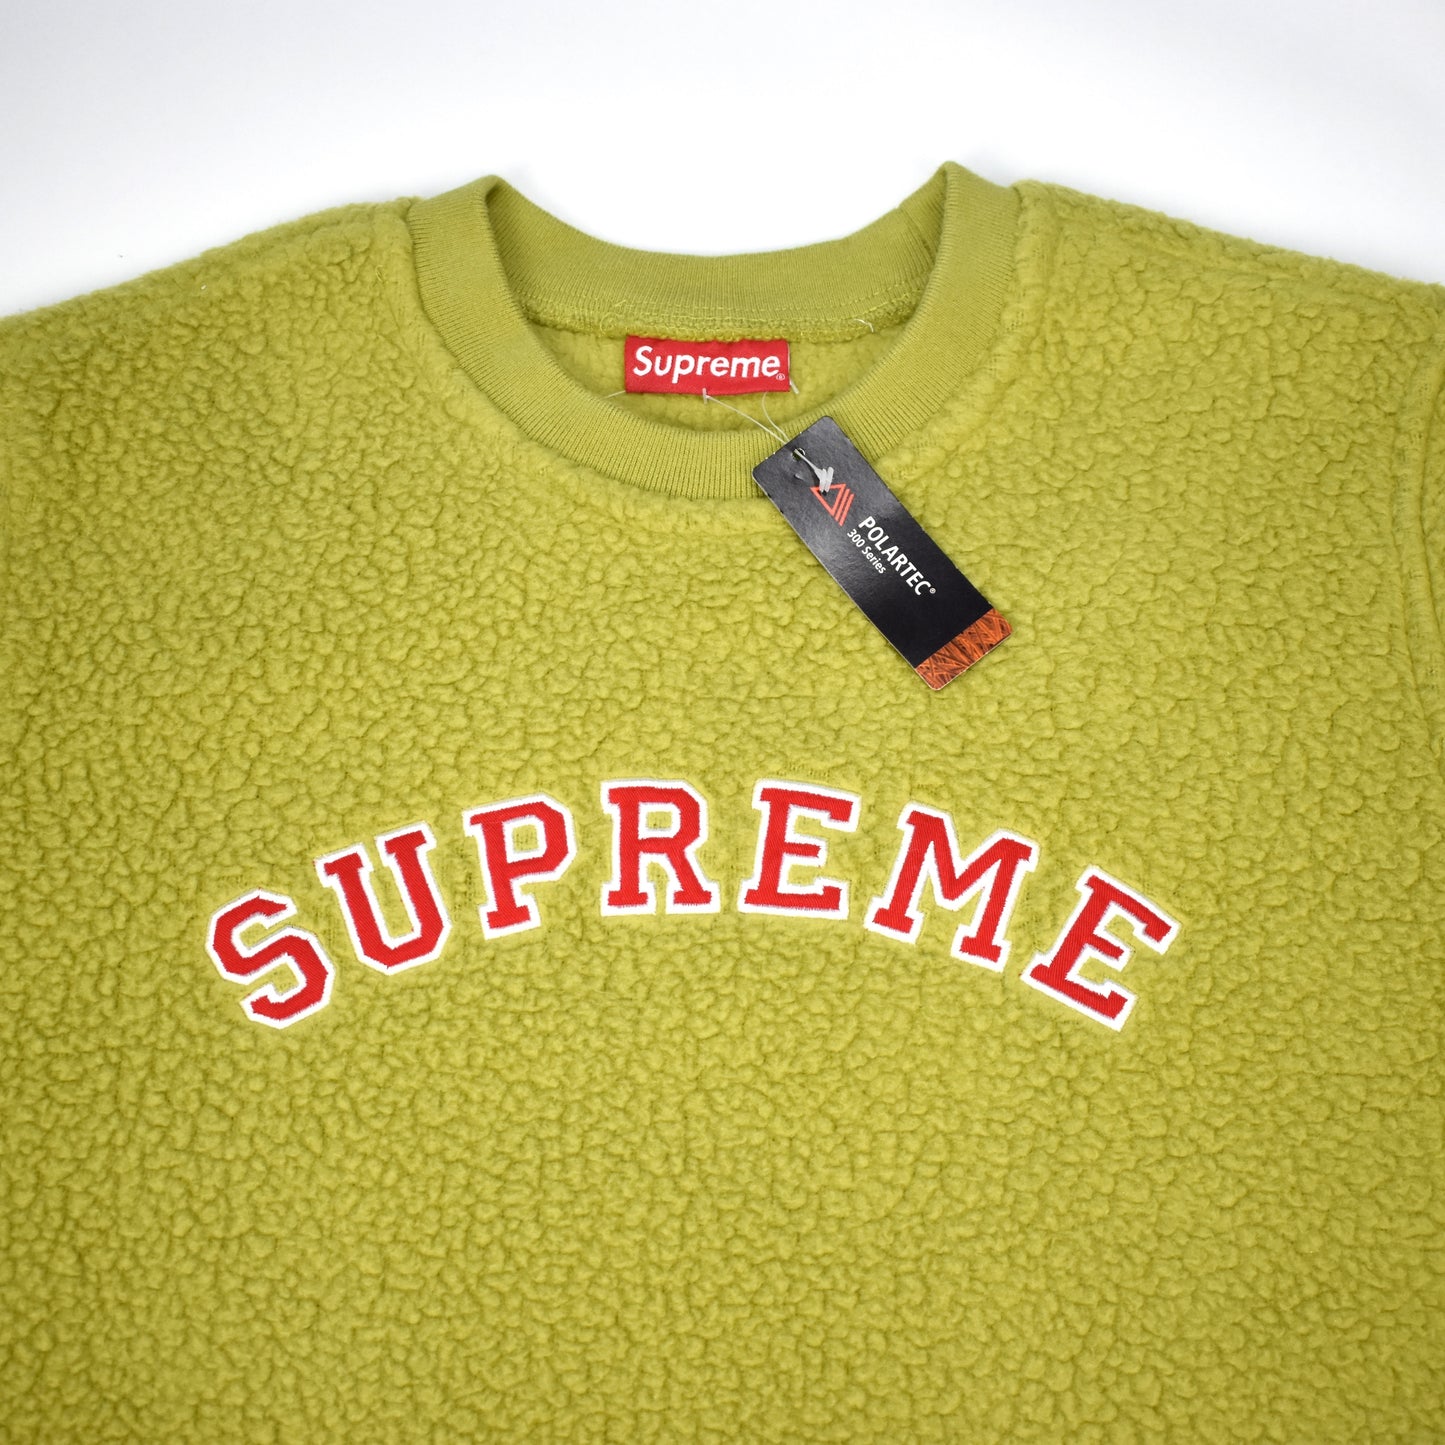 Supreme - Sulphur Polartec Deep Pile Sweatshirt